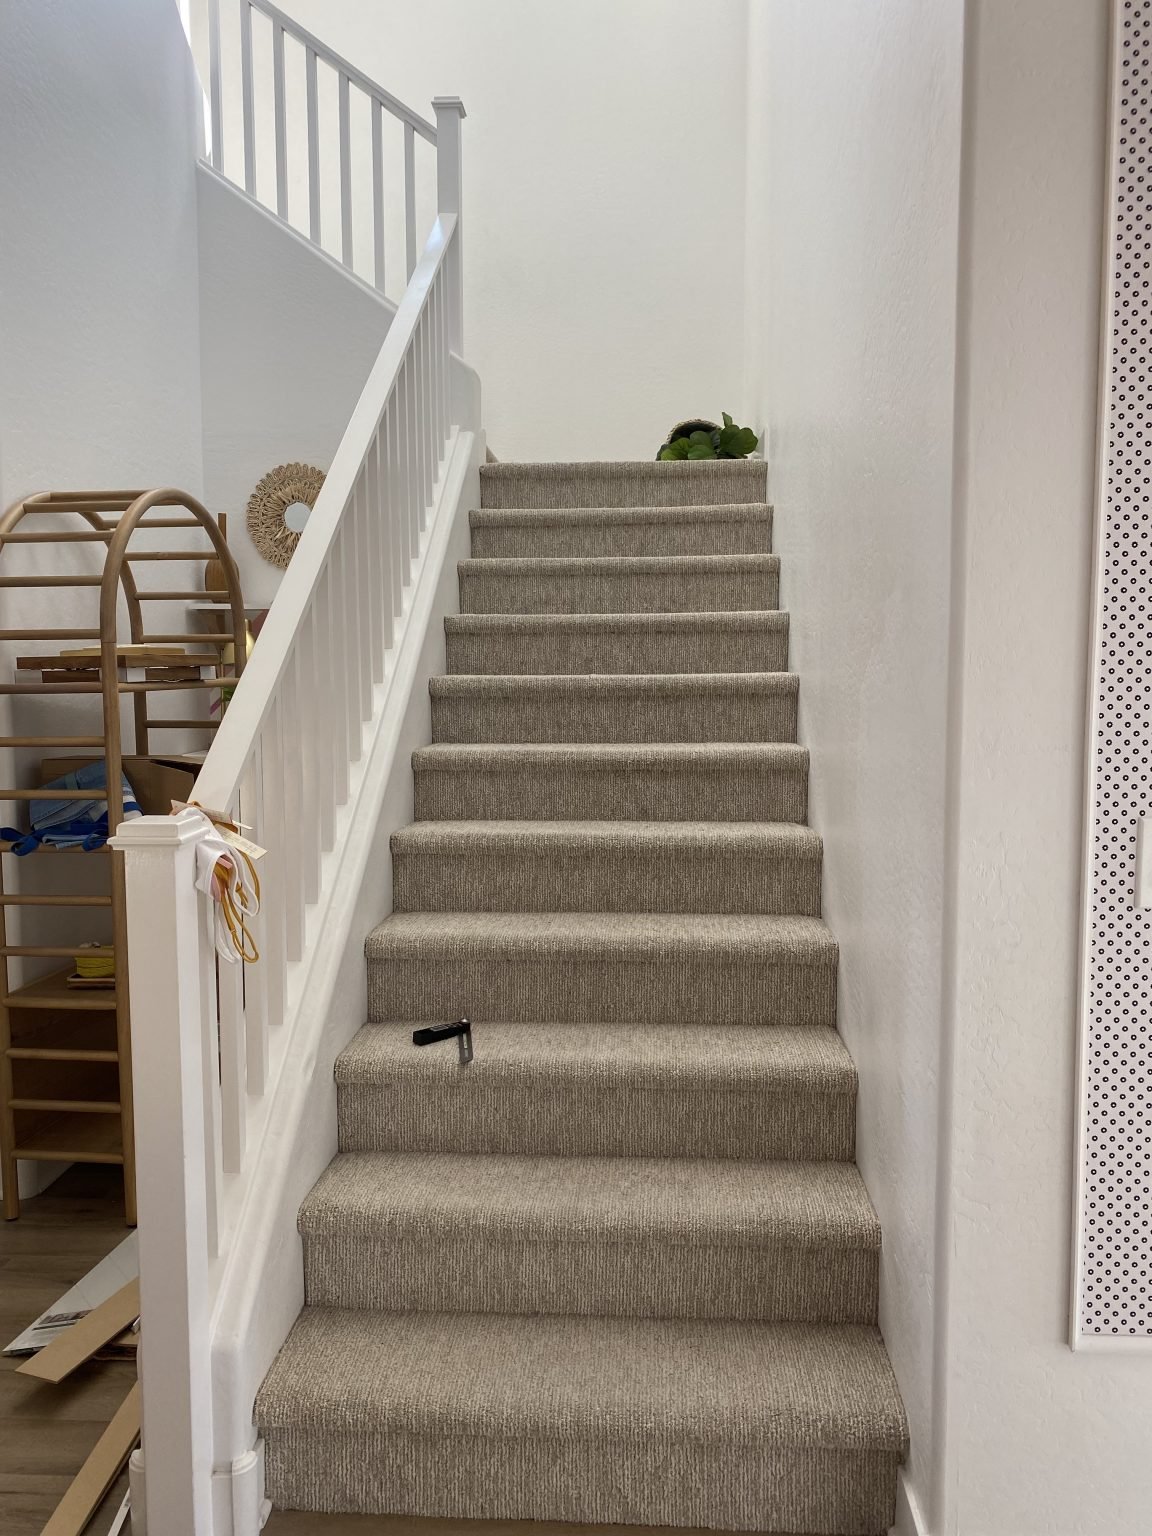 One-Room-Challenge-Stairs-Before-1152x1536.jpg